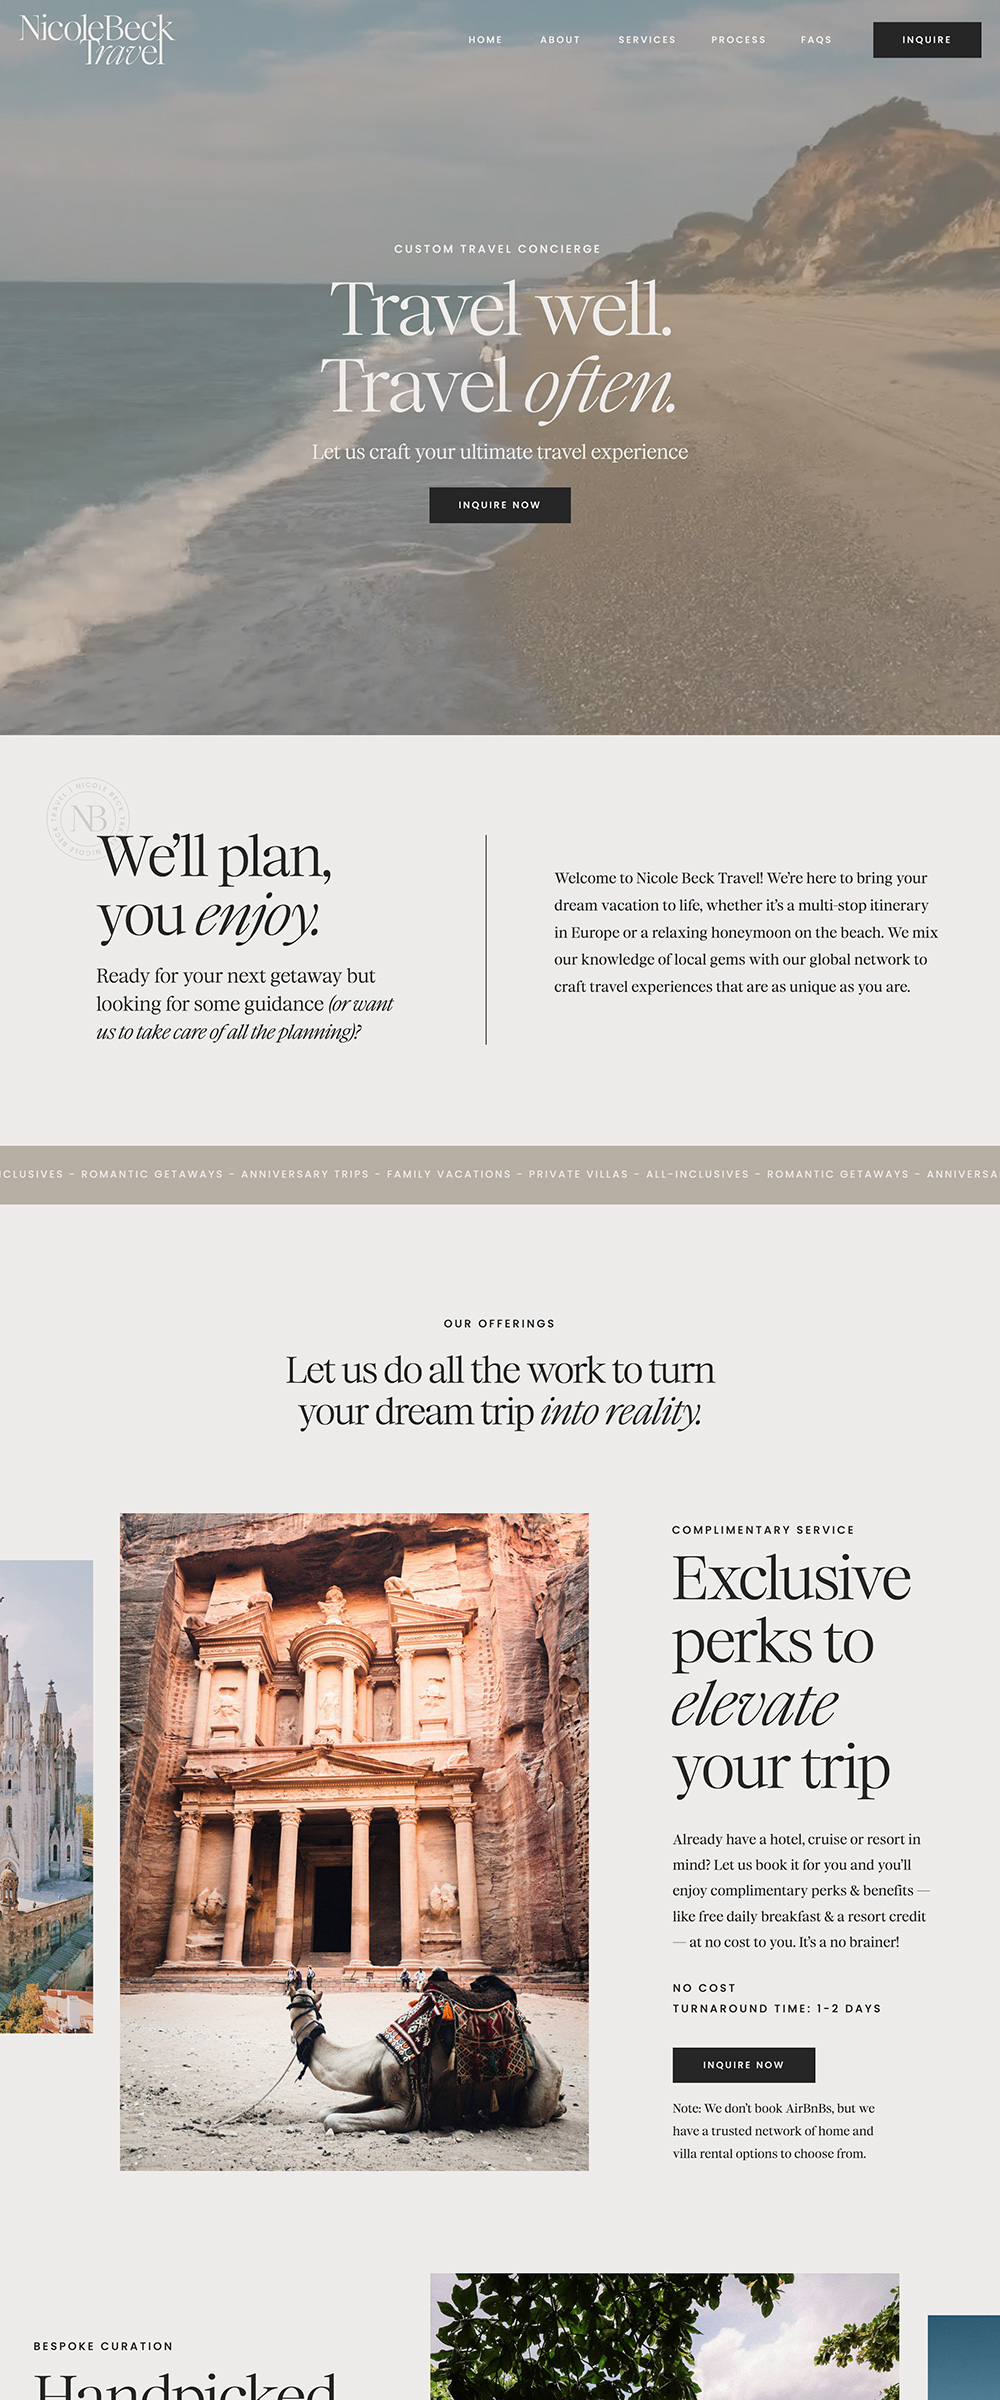 Showit website design for Custom Travel Concierge | Nicole Beck Travel - by Hey Hello Studio